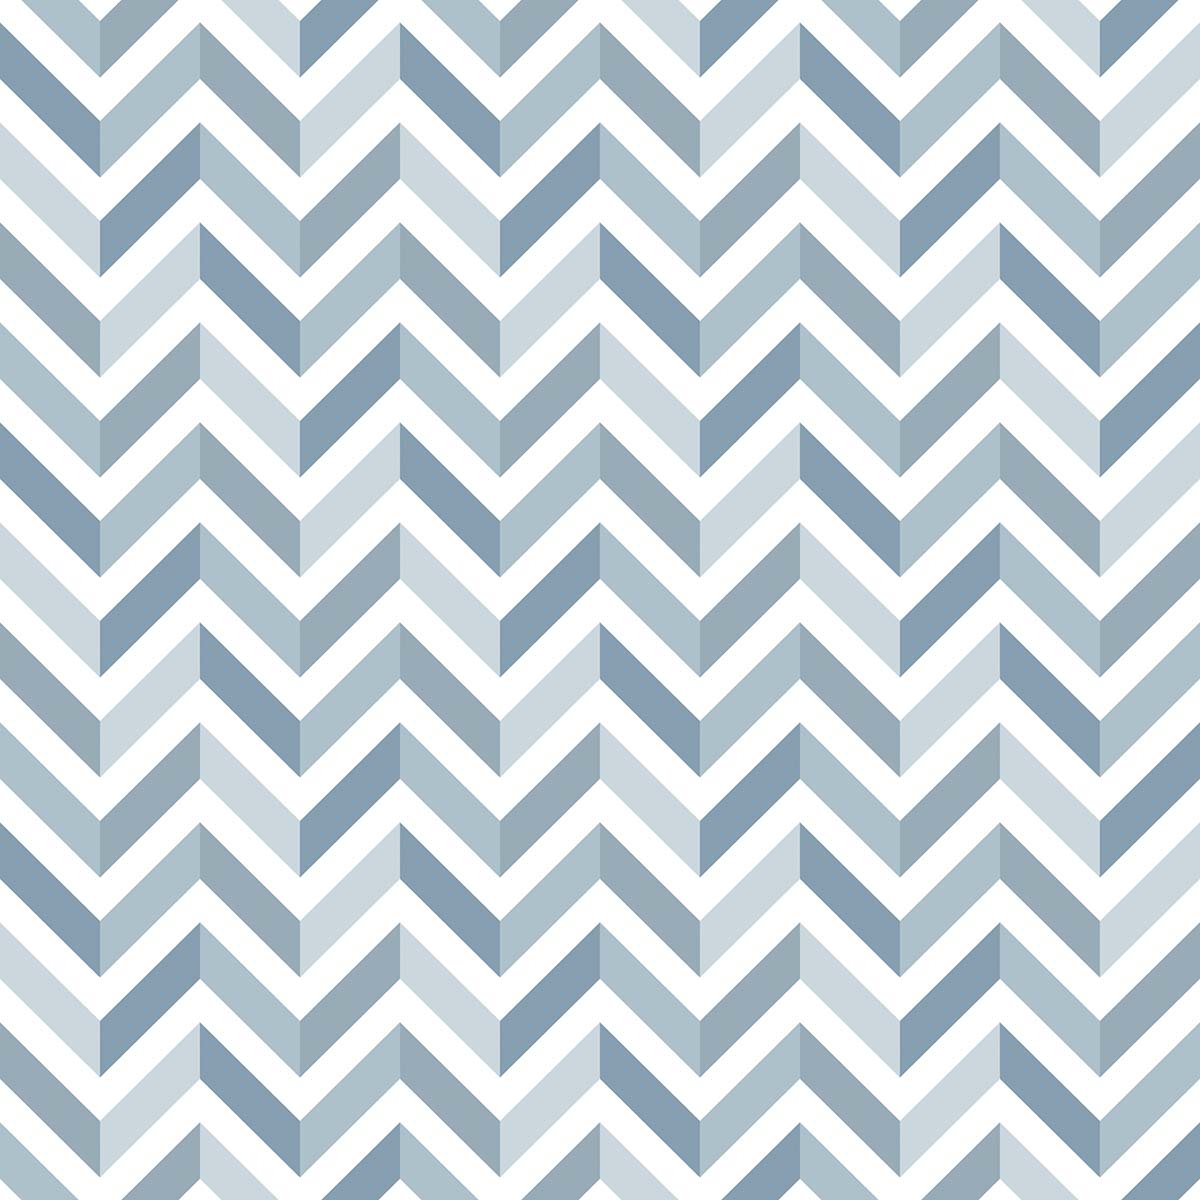 A blue and white chevron pattern